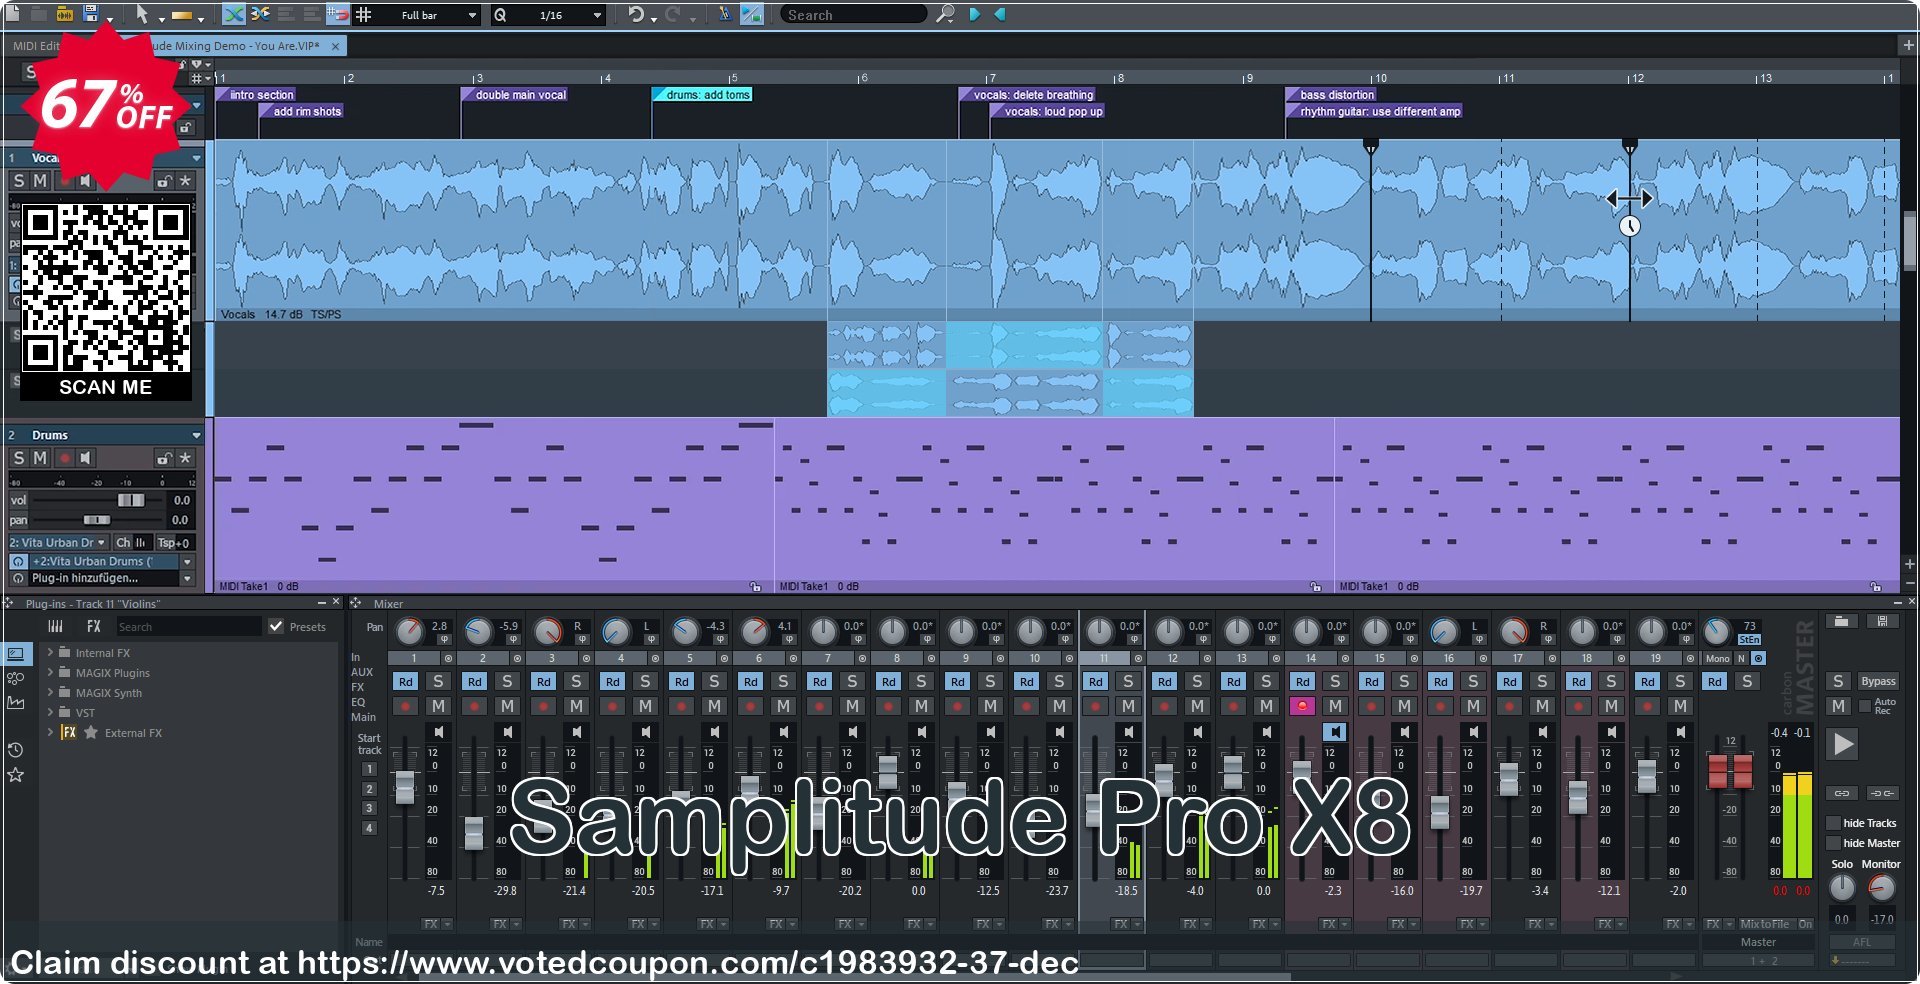 Samplitude Pro X7